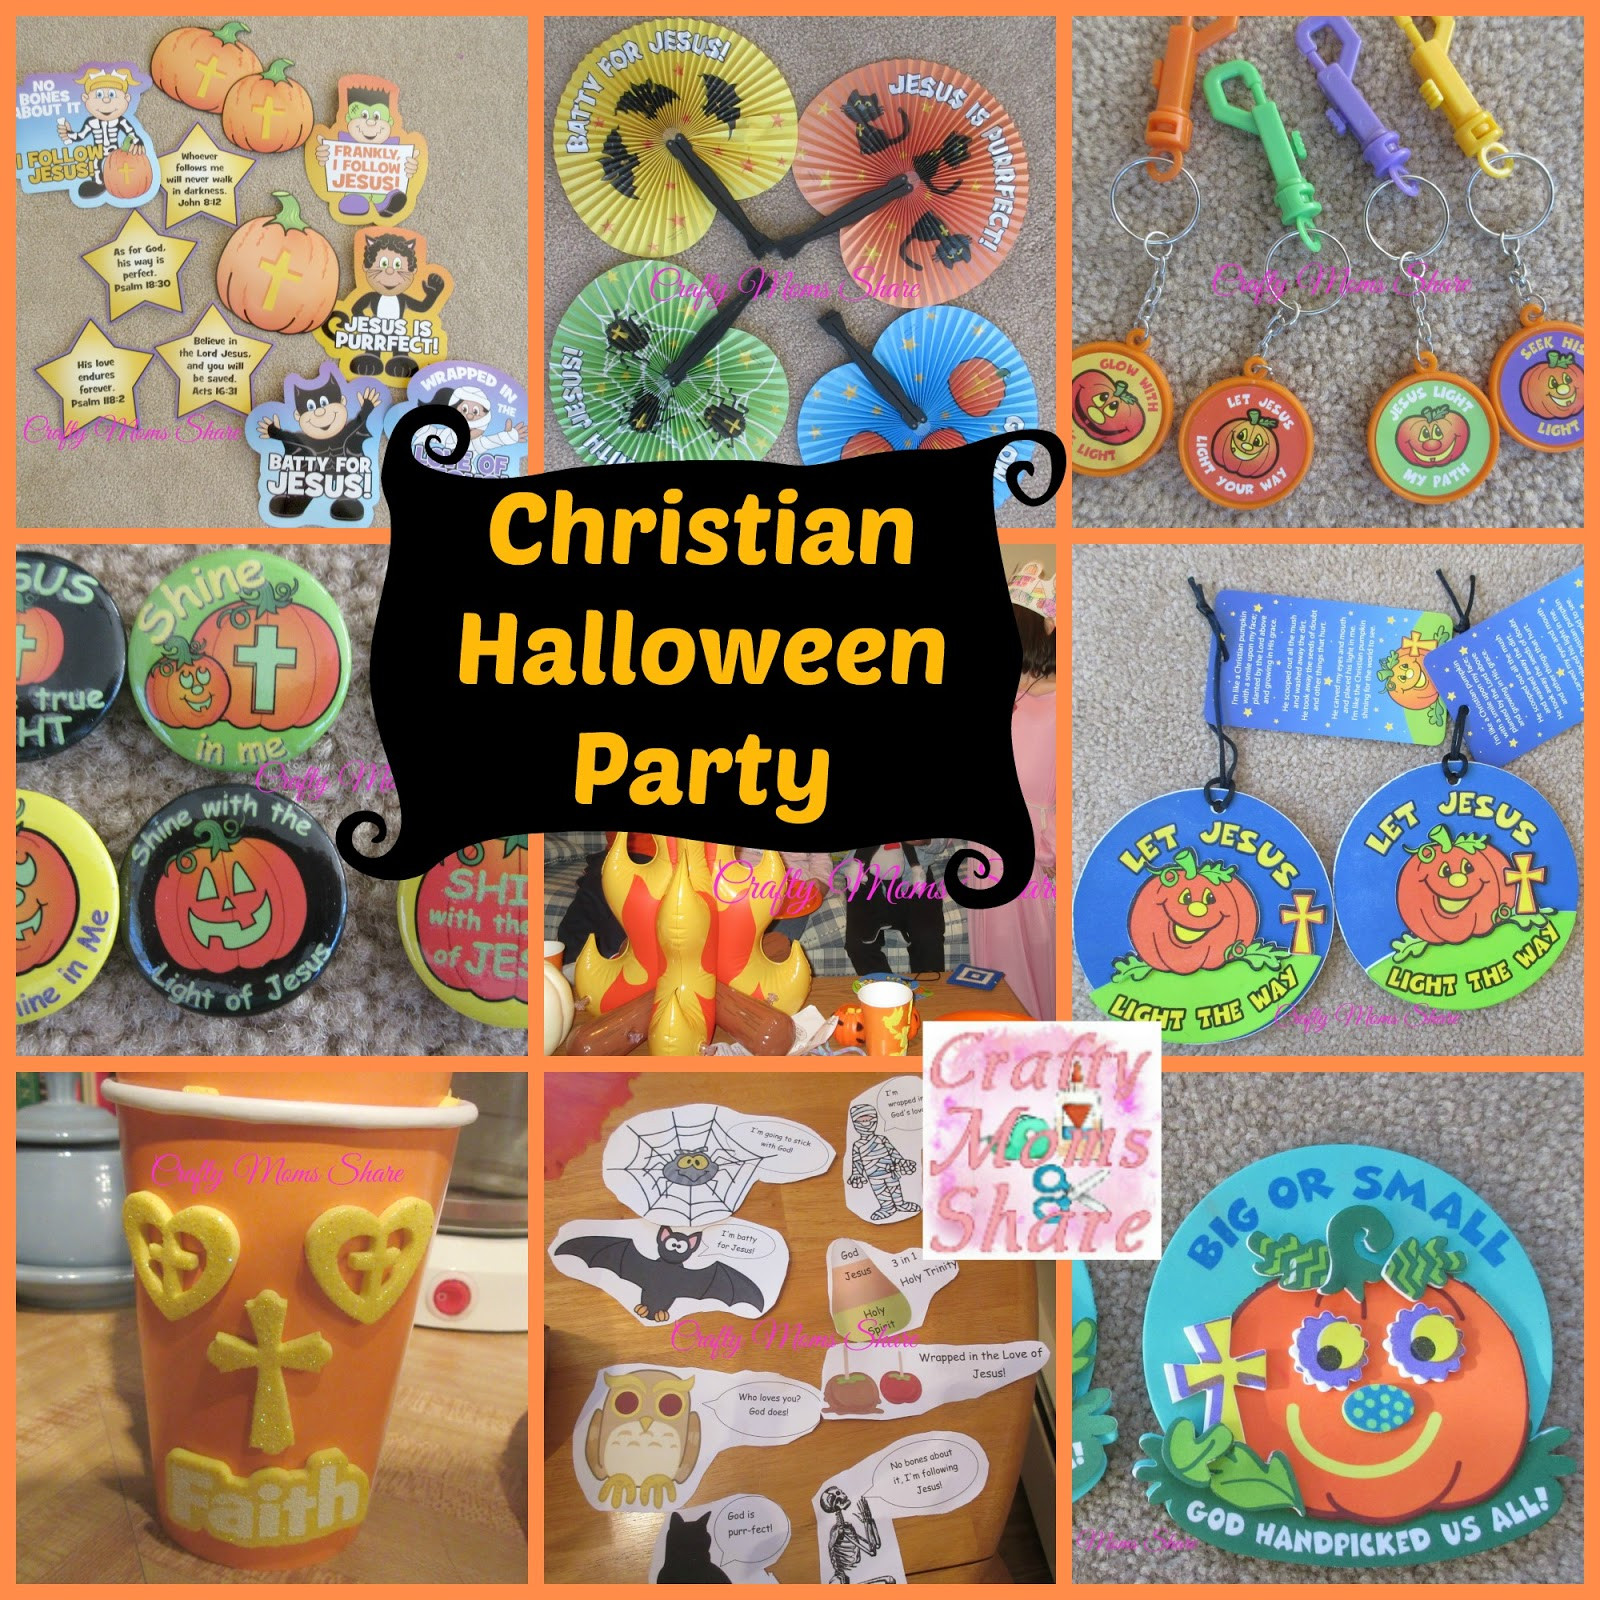 Christian Halloween Party Ideas
 Crafty Moms Christian Halloween Party